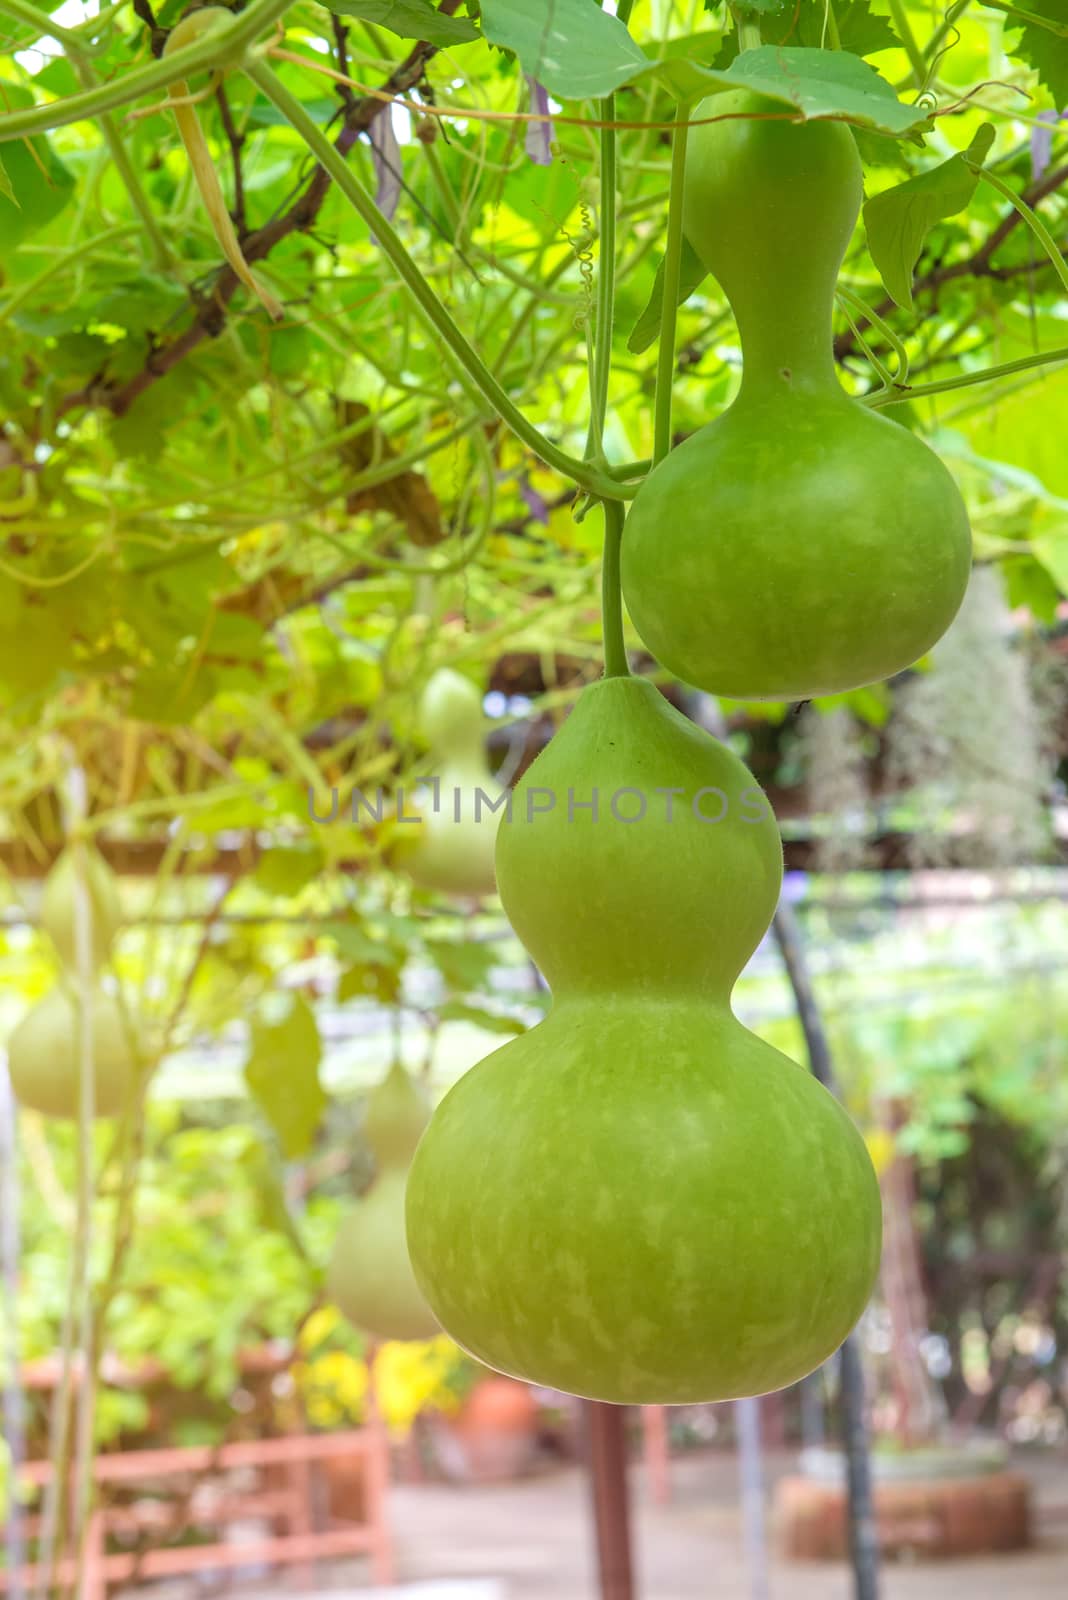 Hanging winter melon in the garden or Wax gourd, Chalkumra in farm.